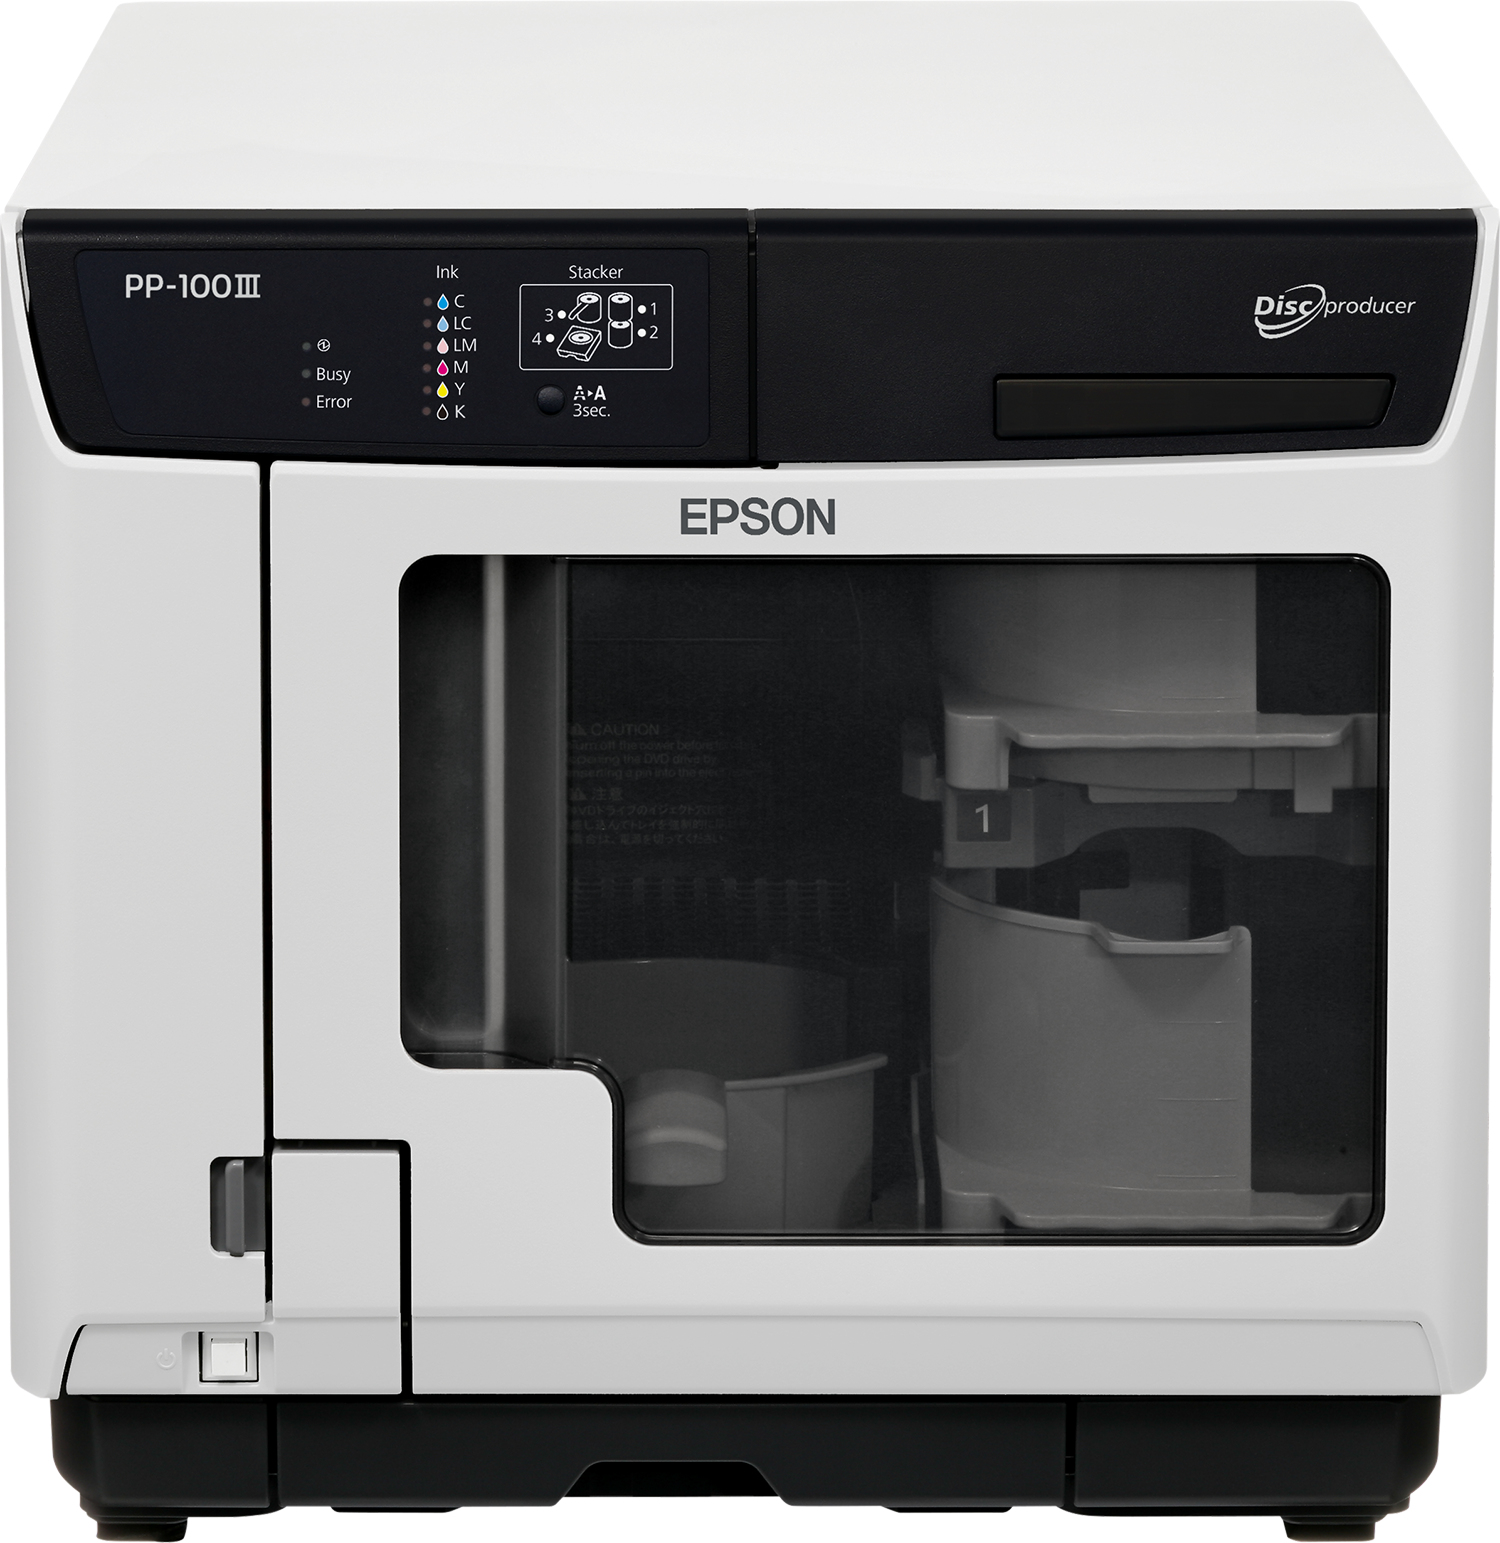 Epson Discproducer PP-100III - Disk-Kopiergerät